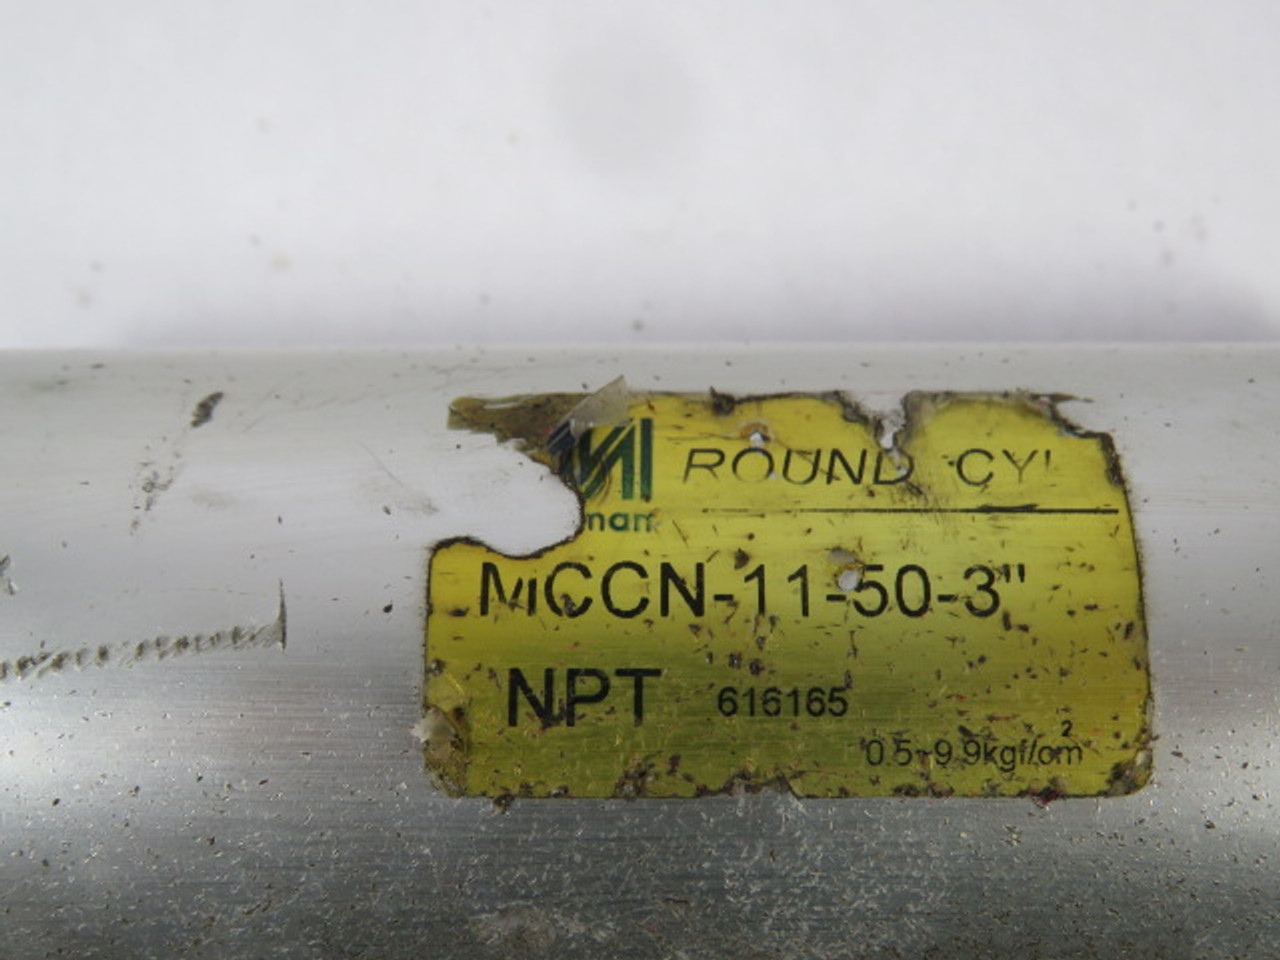 Mindman MCCN-11-50-3 Pneumatic Cylinder 50MM Bore 3" Stroke USED